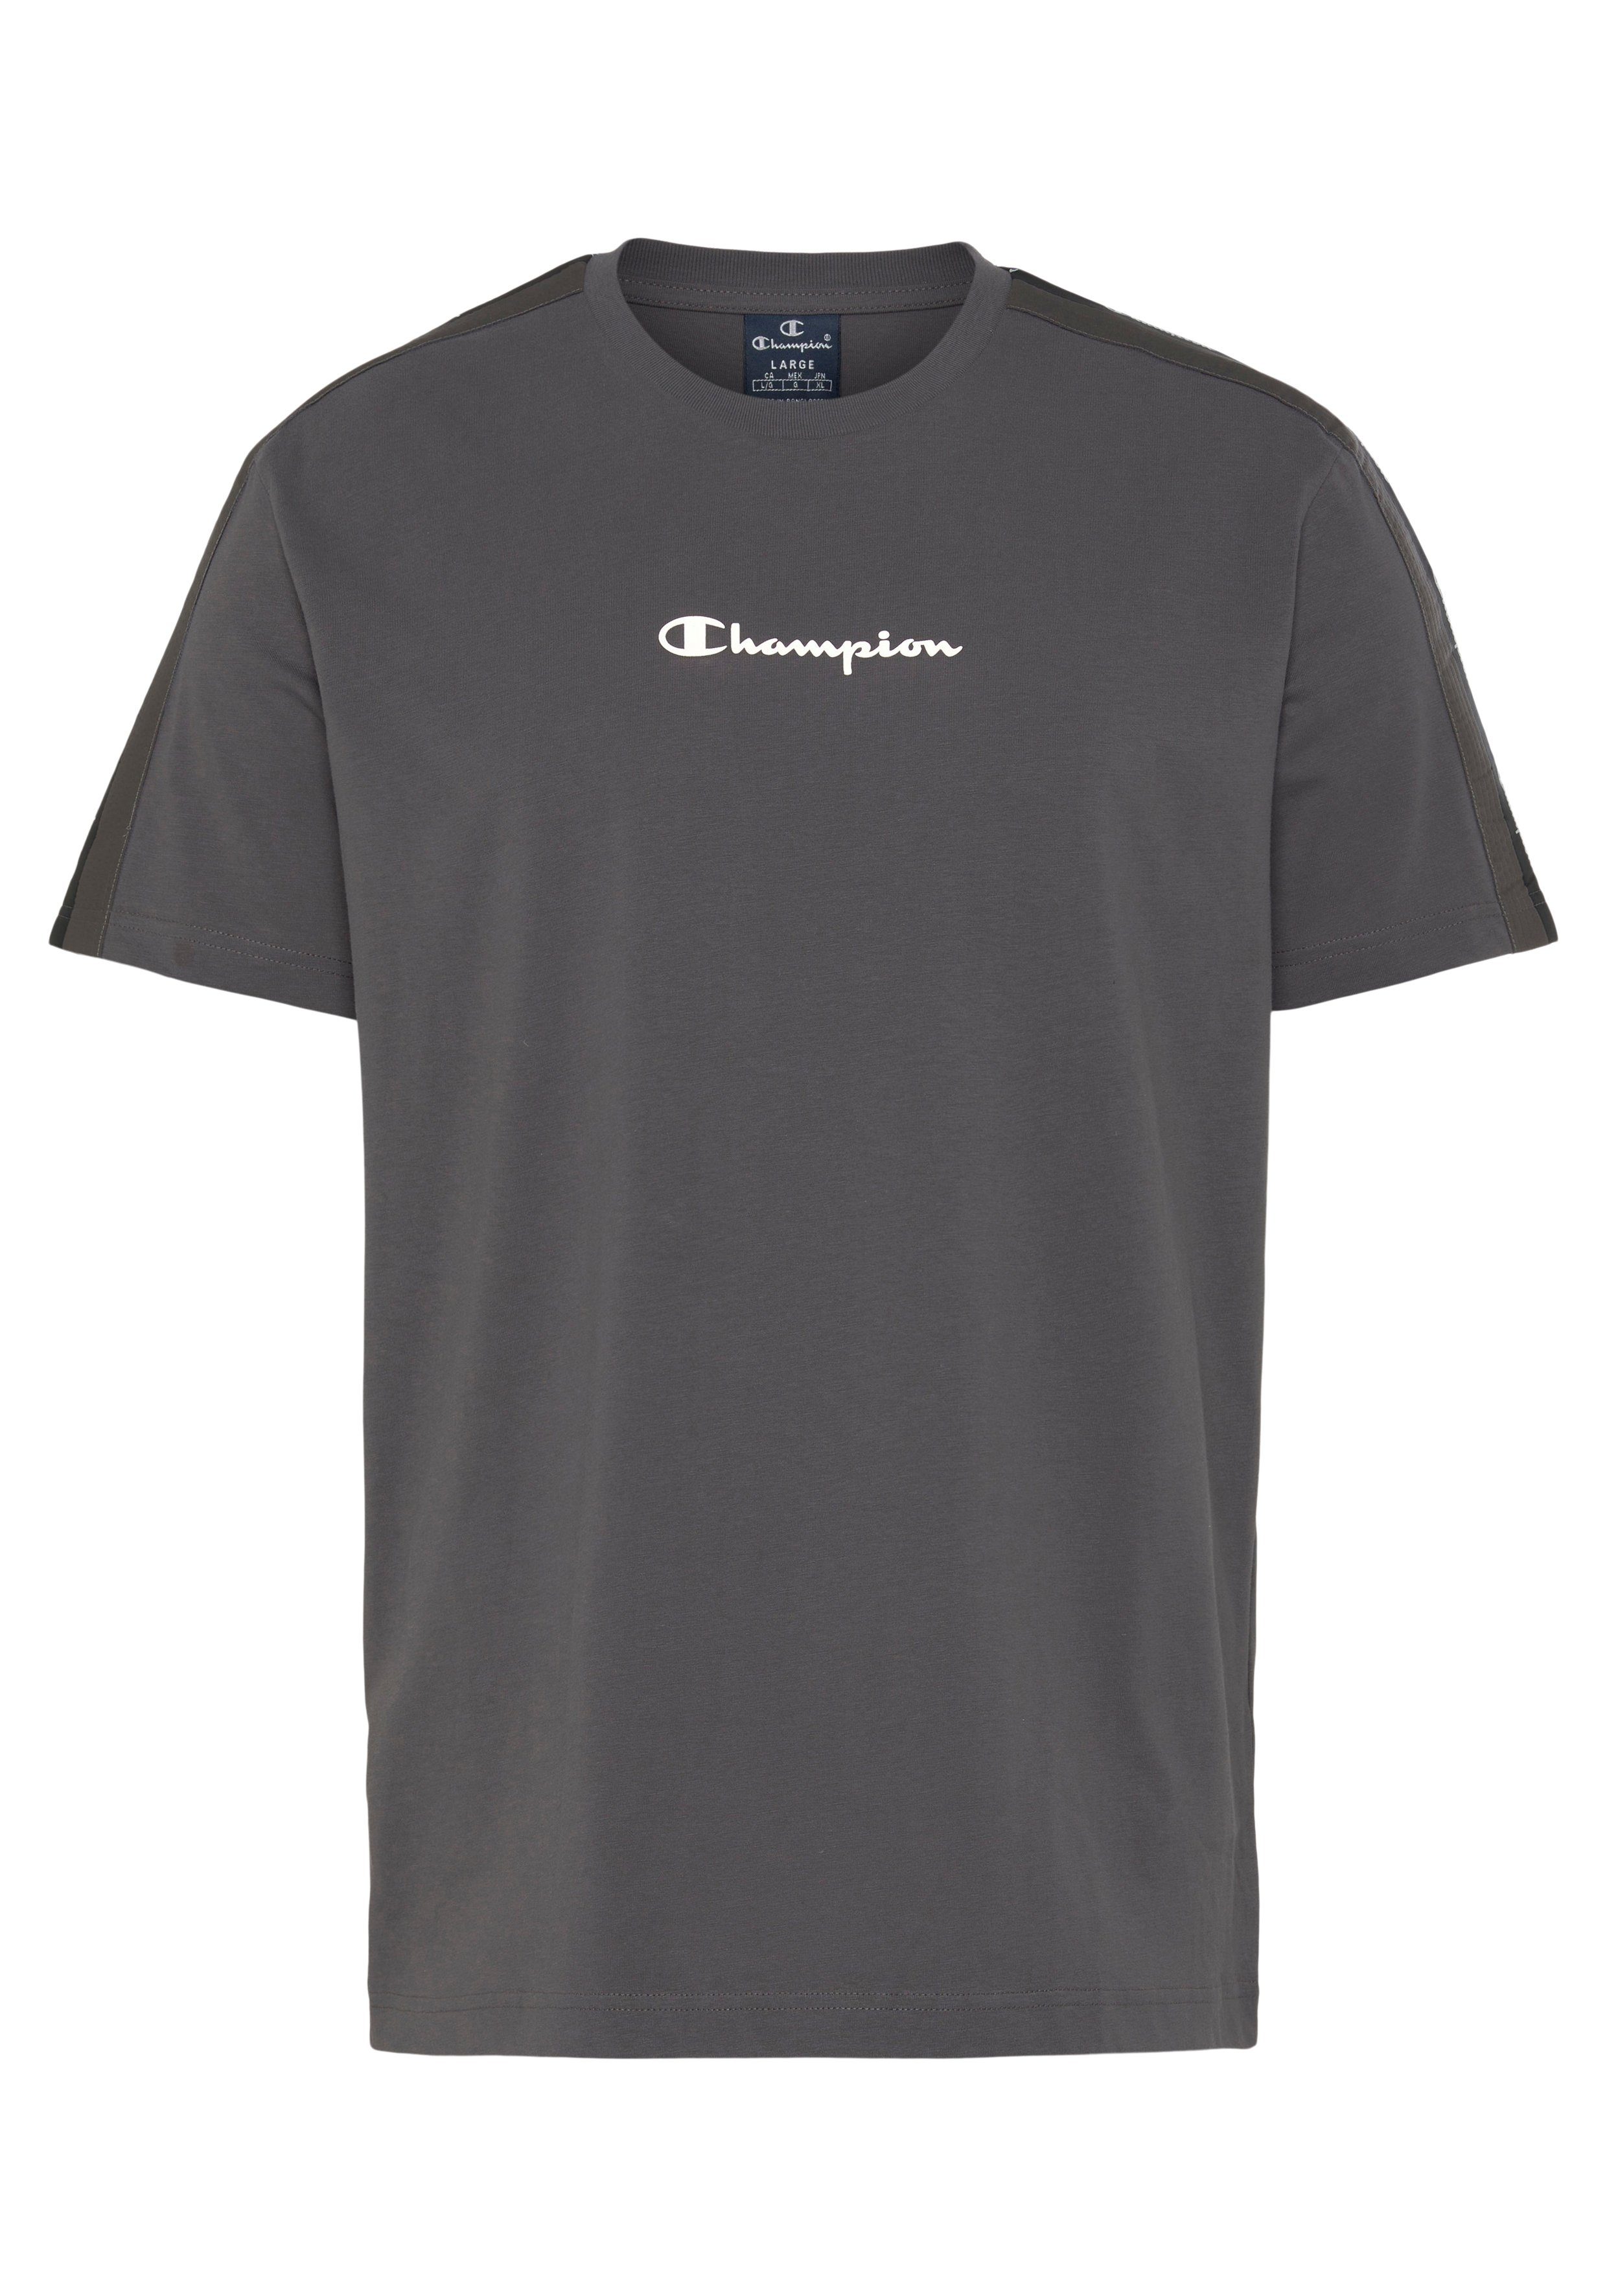 Champion T-Shirt Tape Crewneck T-Shirt small logo grau